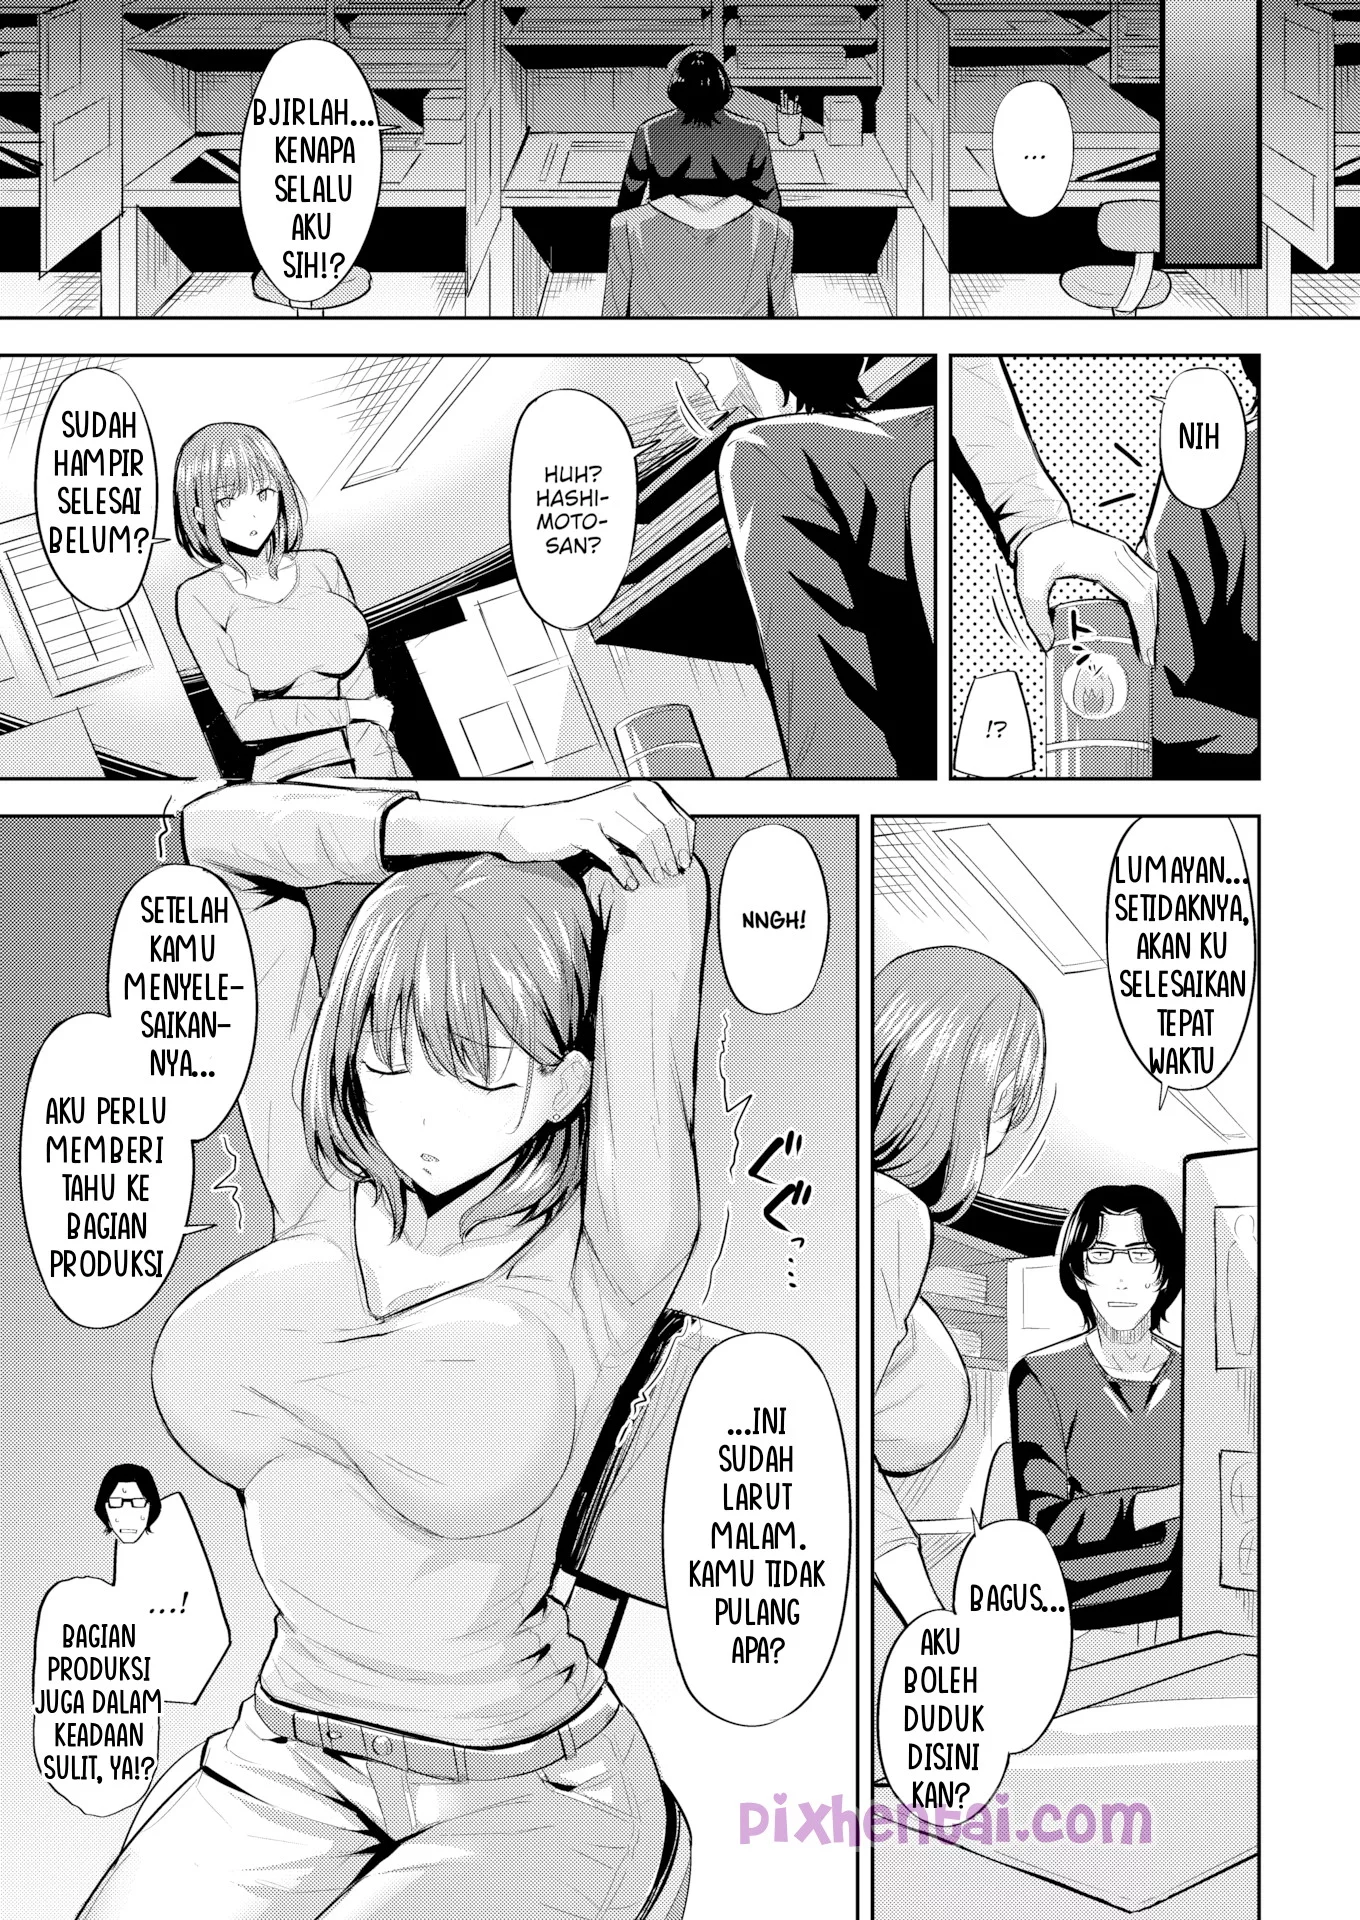 Komik hentai xxx manga sex bokep Susuku Jadi Bahan Referensi Animator 3